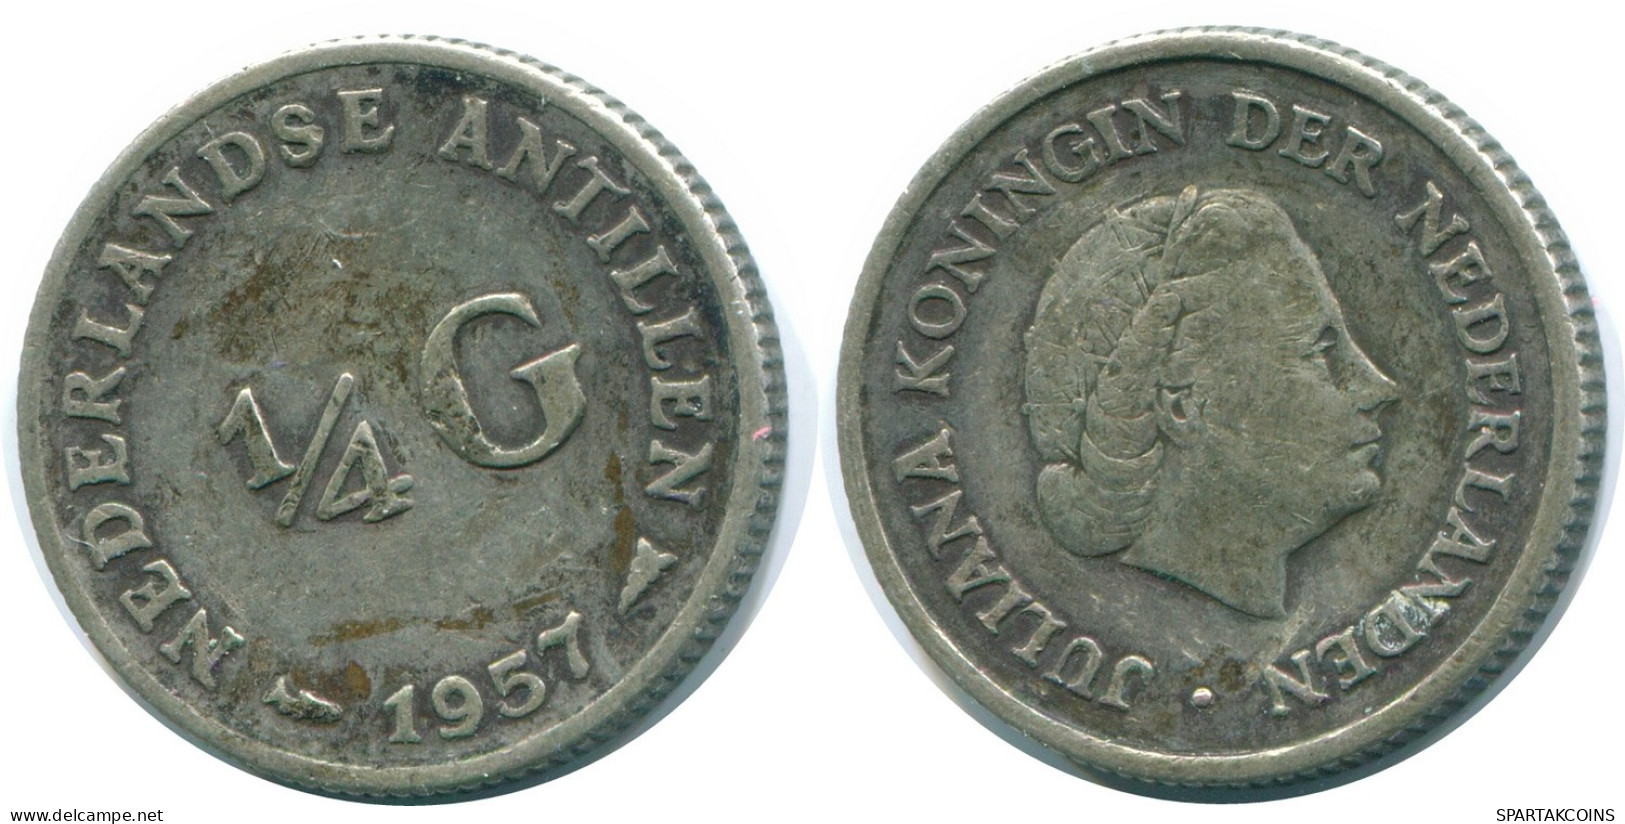 1/4 GULDEN 1957 NETHERLANDS ANTILLES SILVER Colonial Coin #NL10988.4.U.A - Antillas Neerlandesas